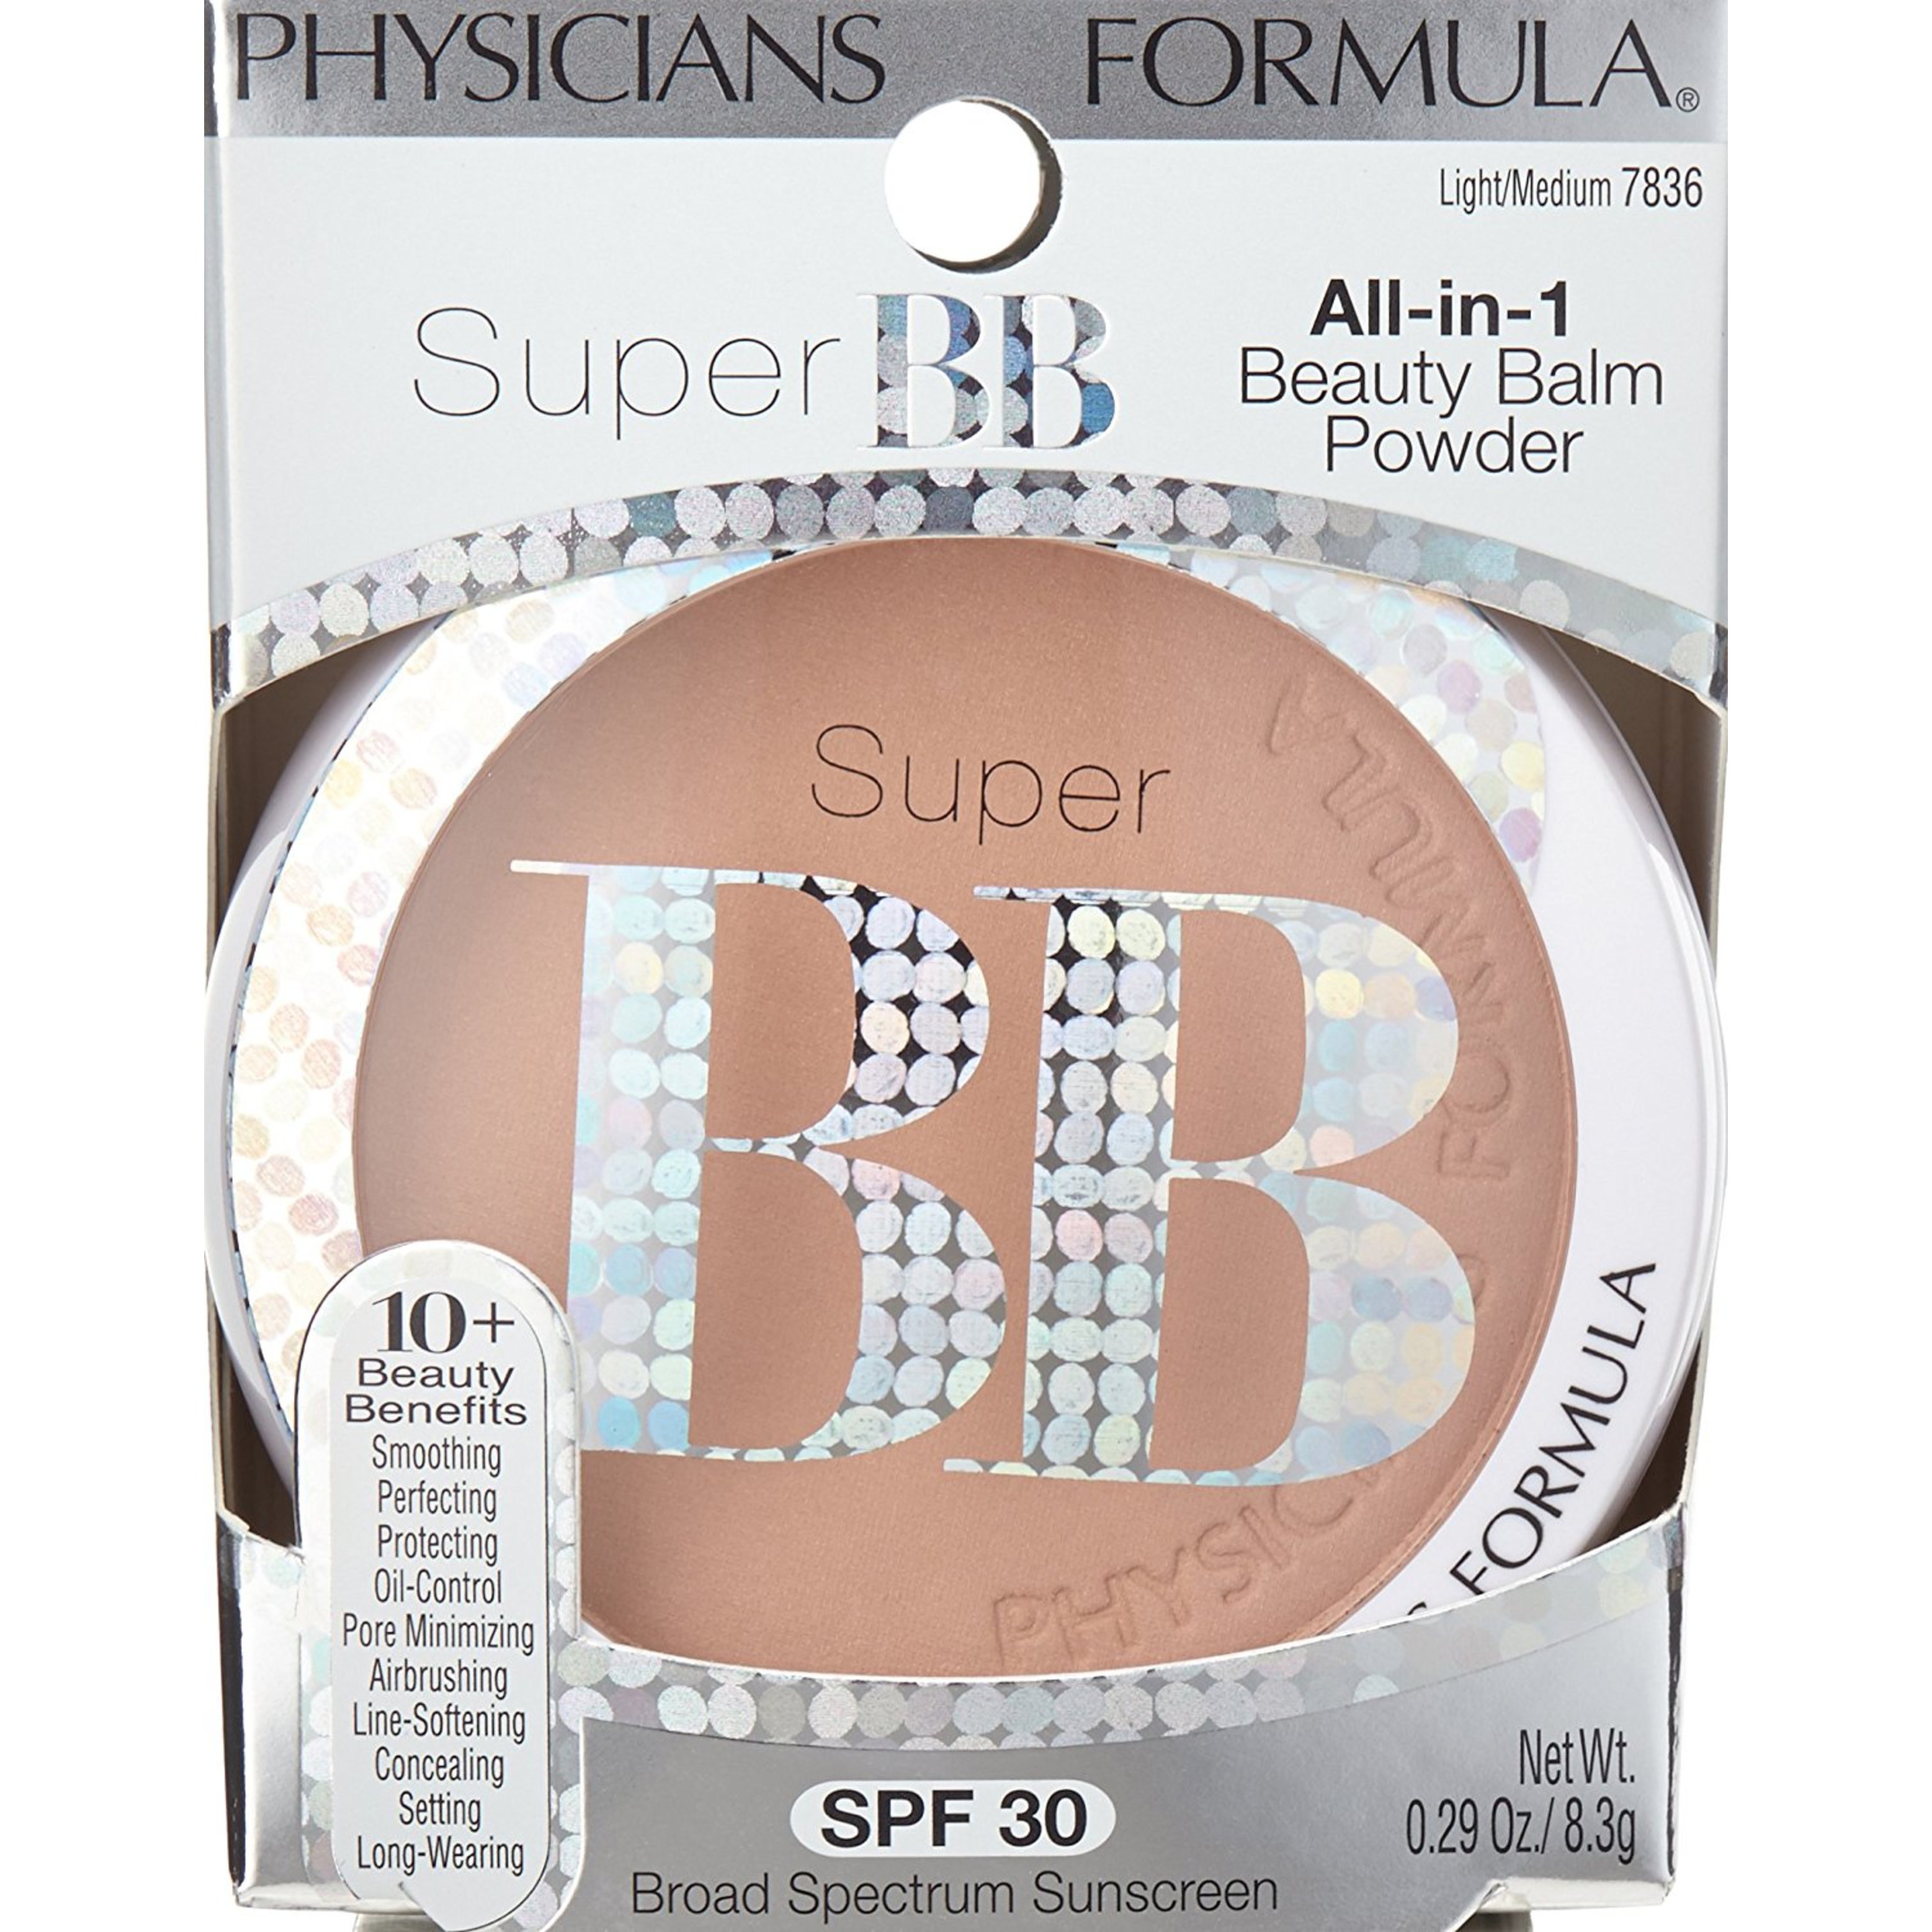 Physicians Formula Super BB™ 10-in-1 Beauty Balm Powder, Light/Medium - image 3 of 5